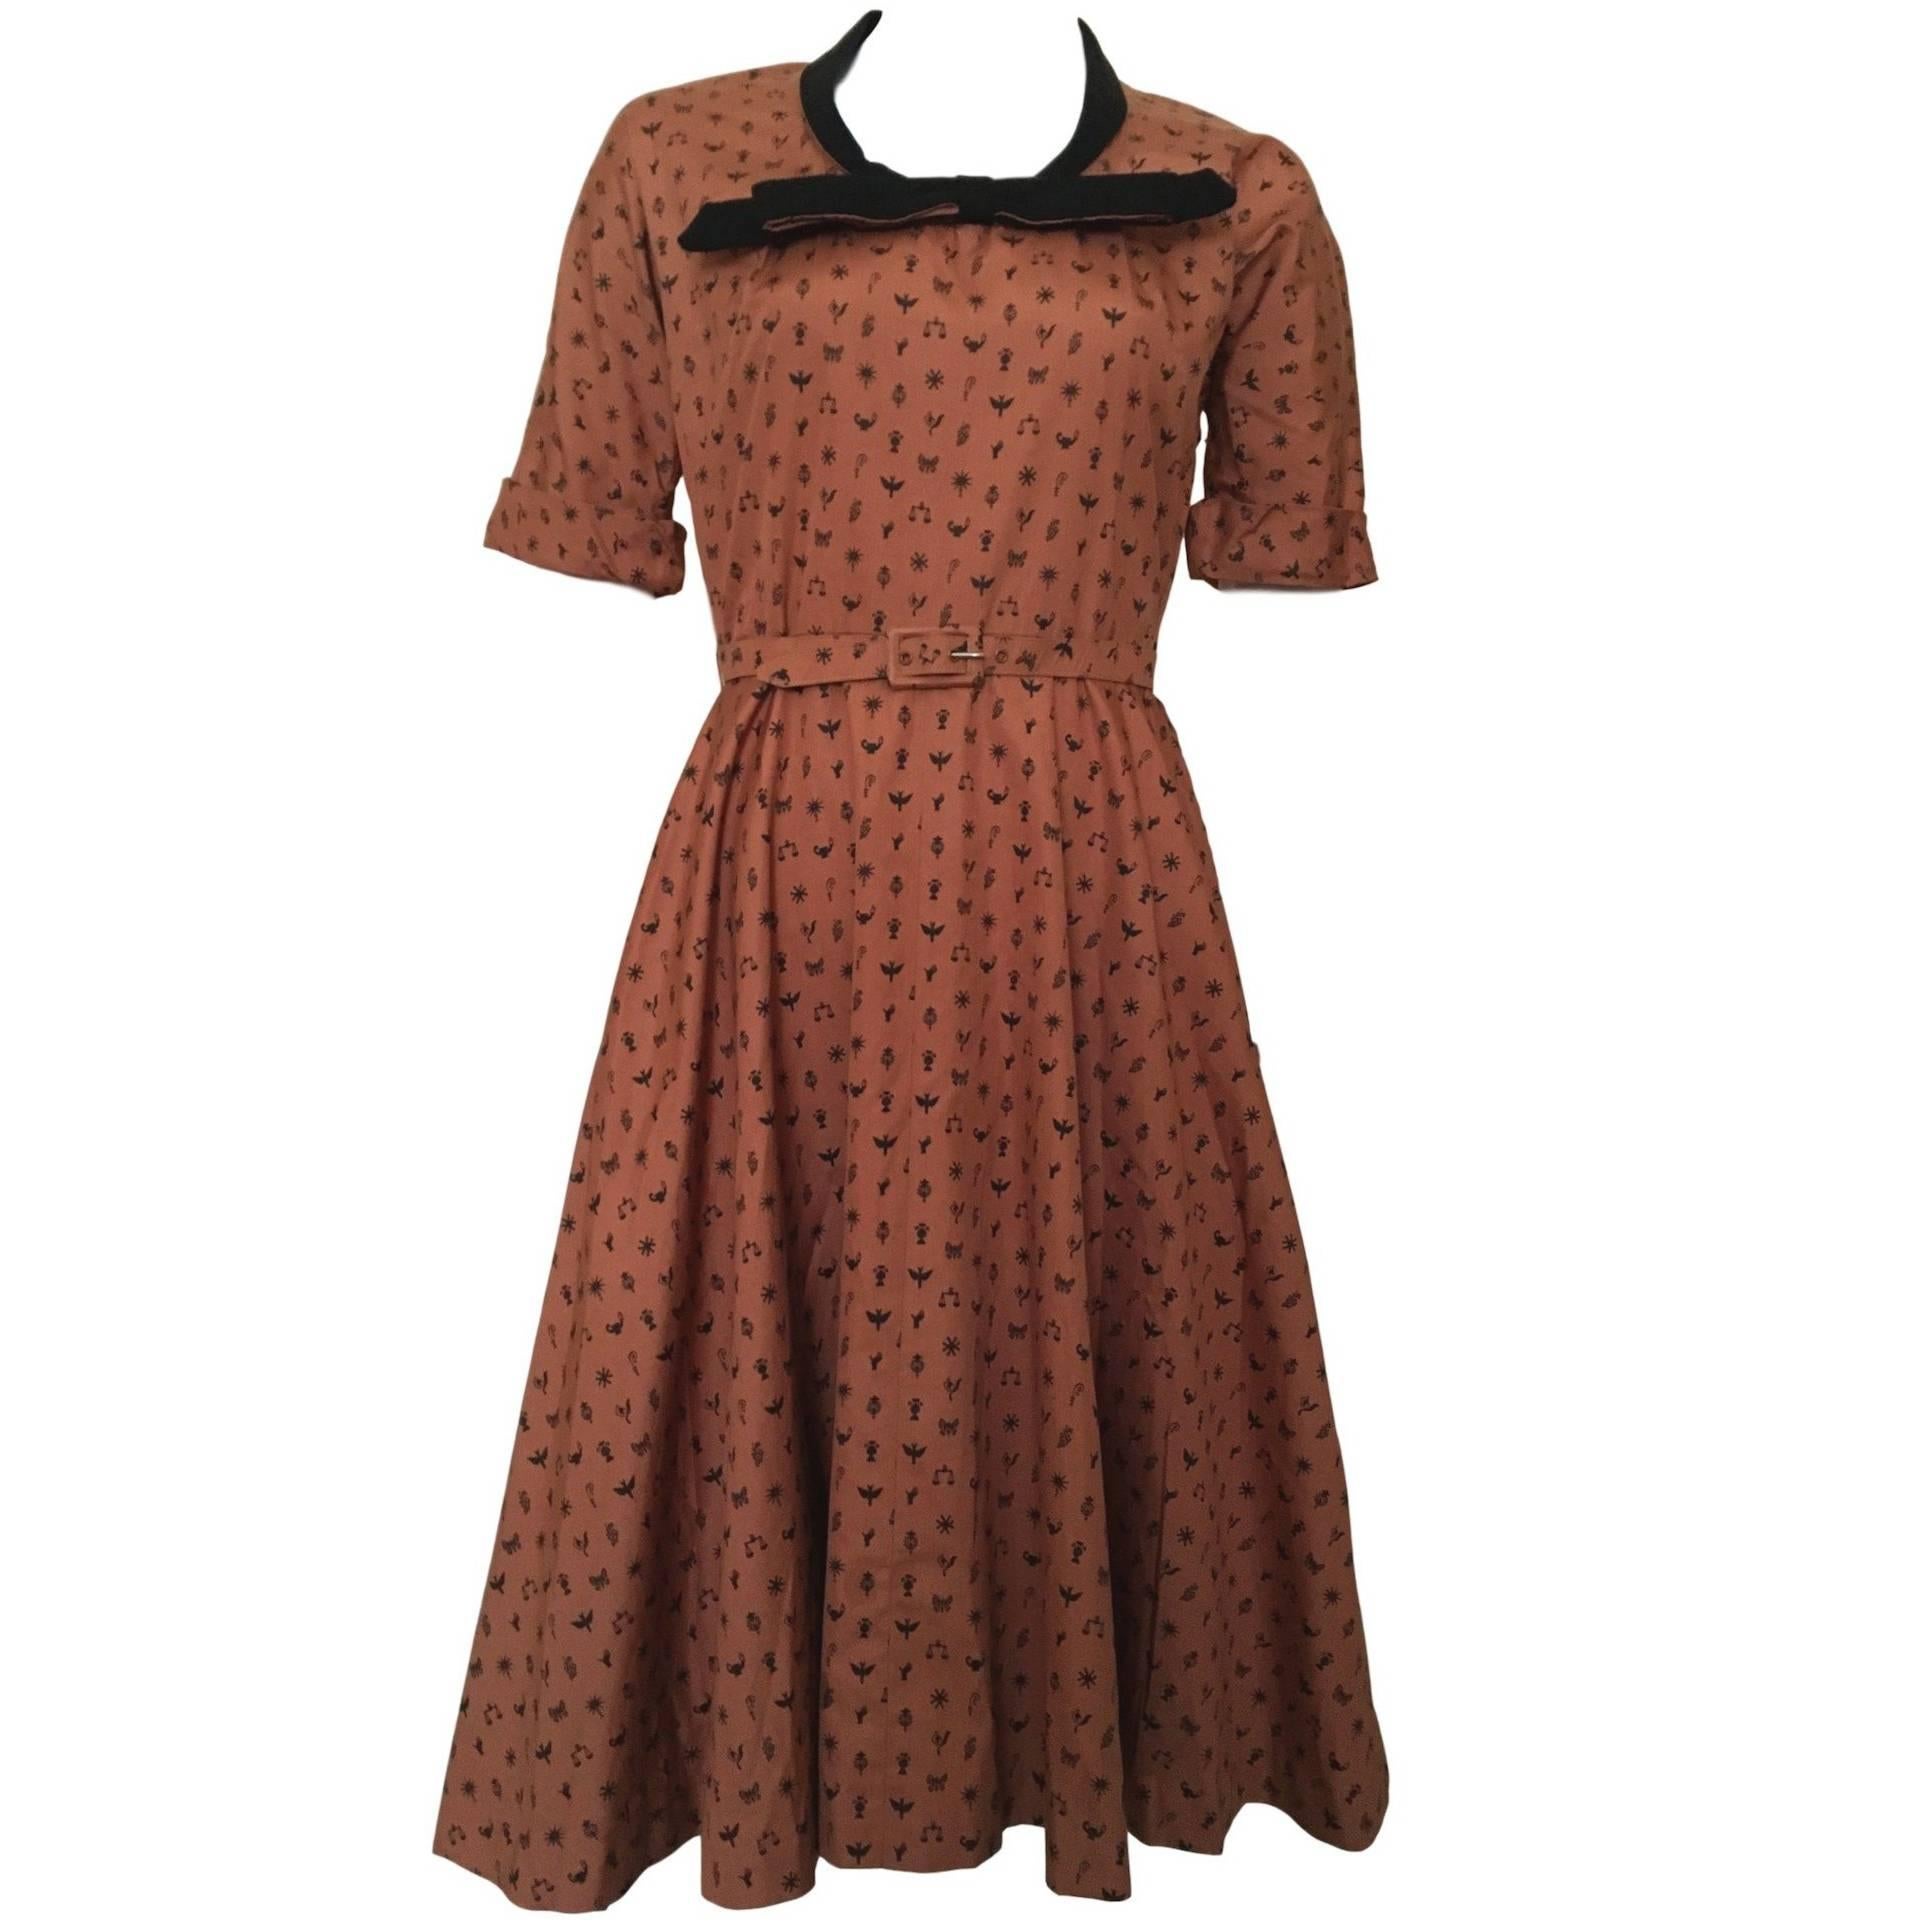 Superb Vintage 1950s Horrockses Cotton Novelty Print Dress Zodiac 10 36